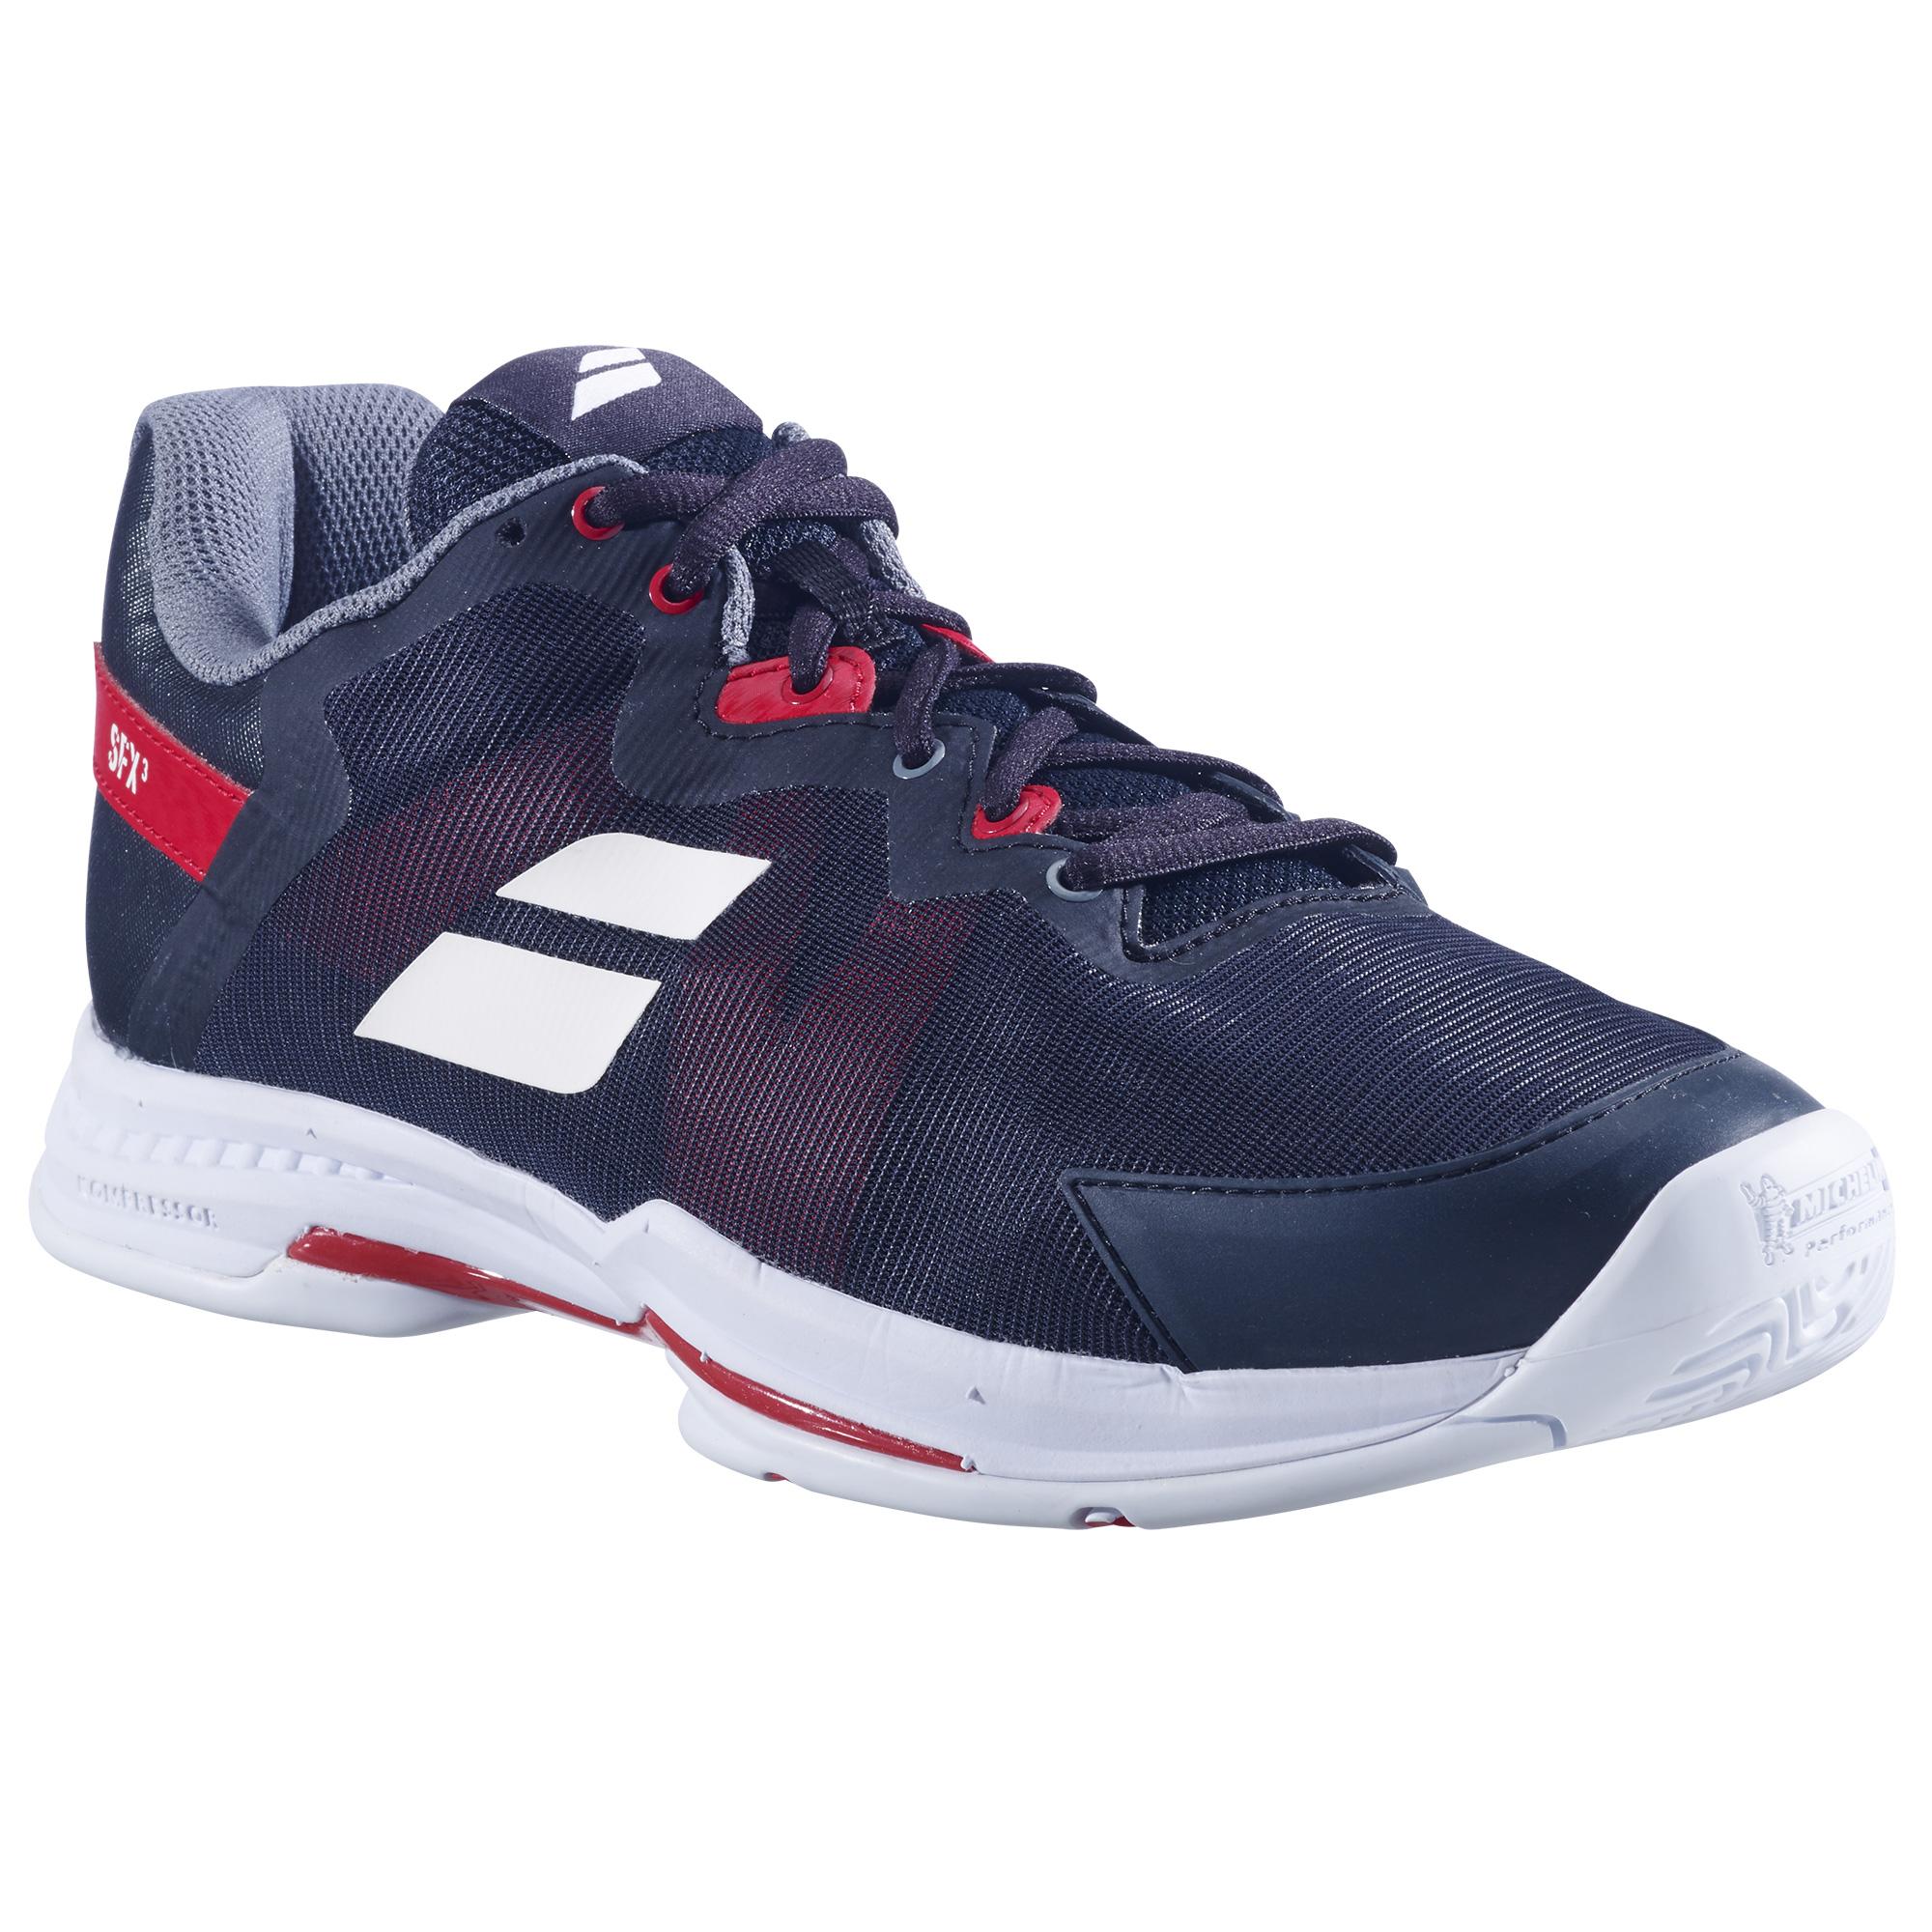 Babolat SFX3 All-Court Men Tennis Shoe - Black/Poppy Red